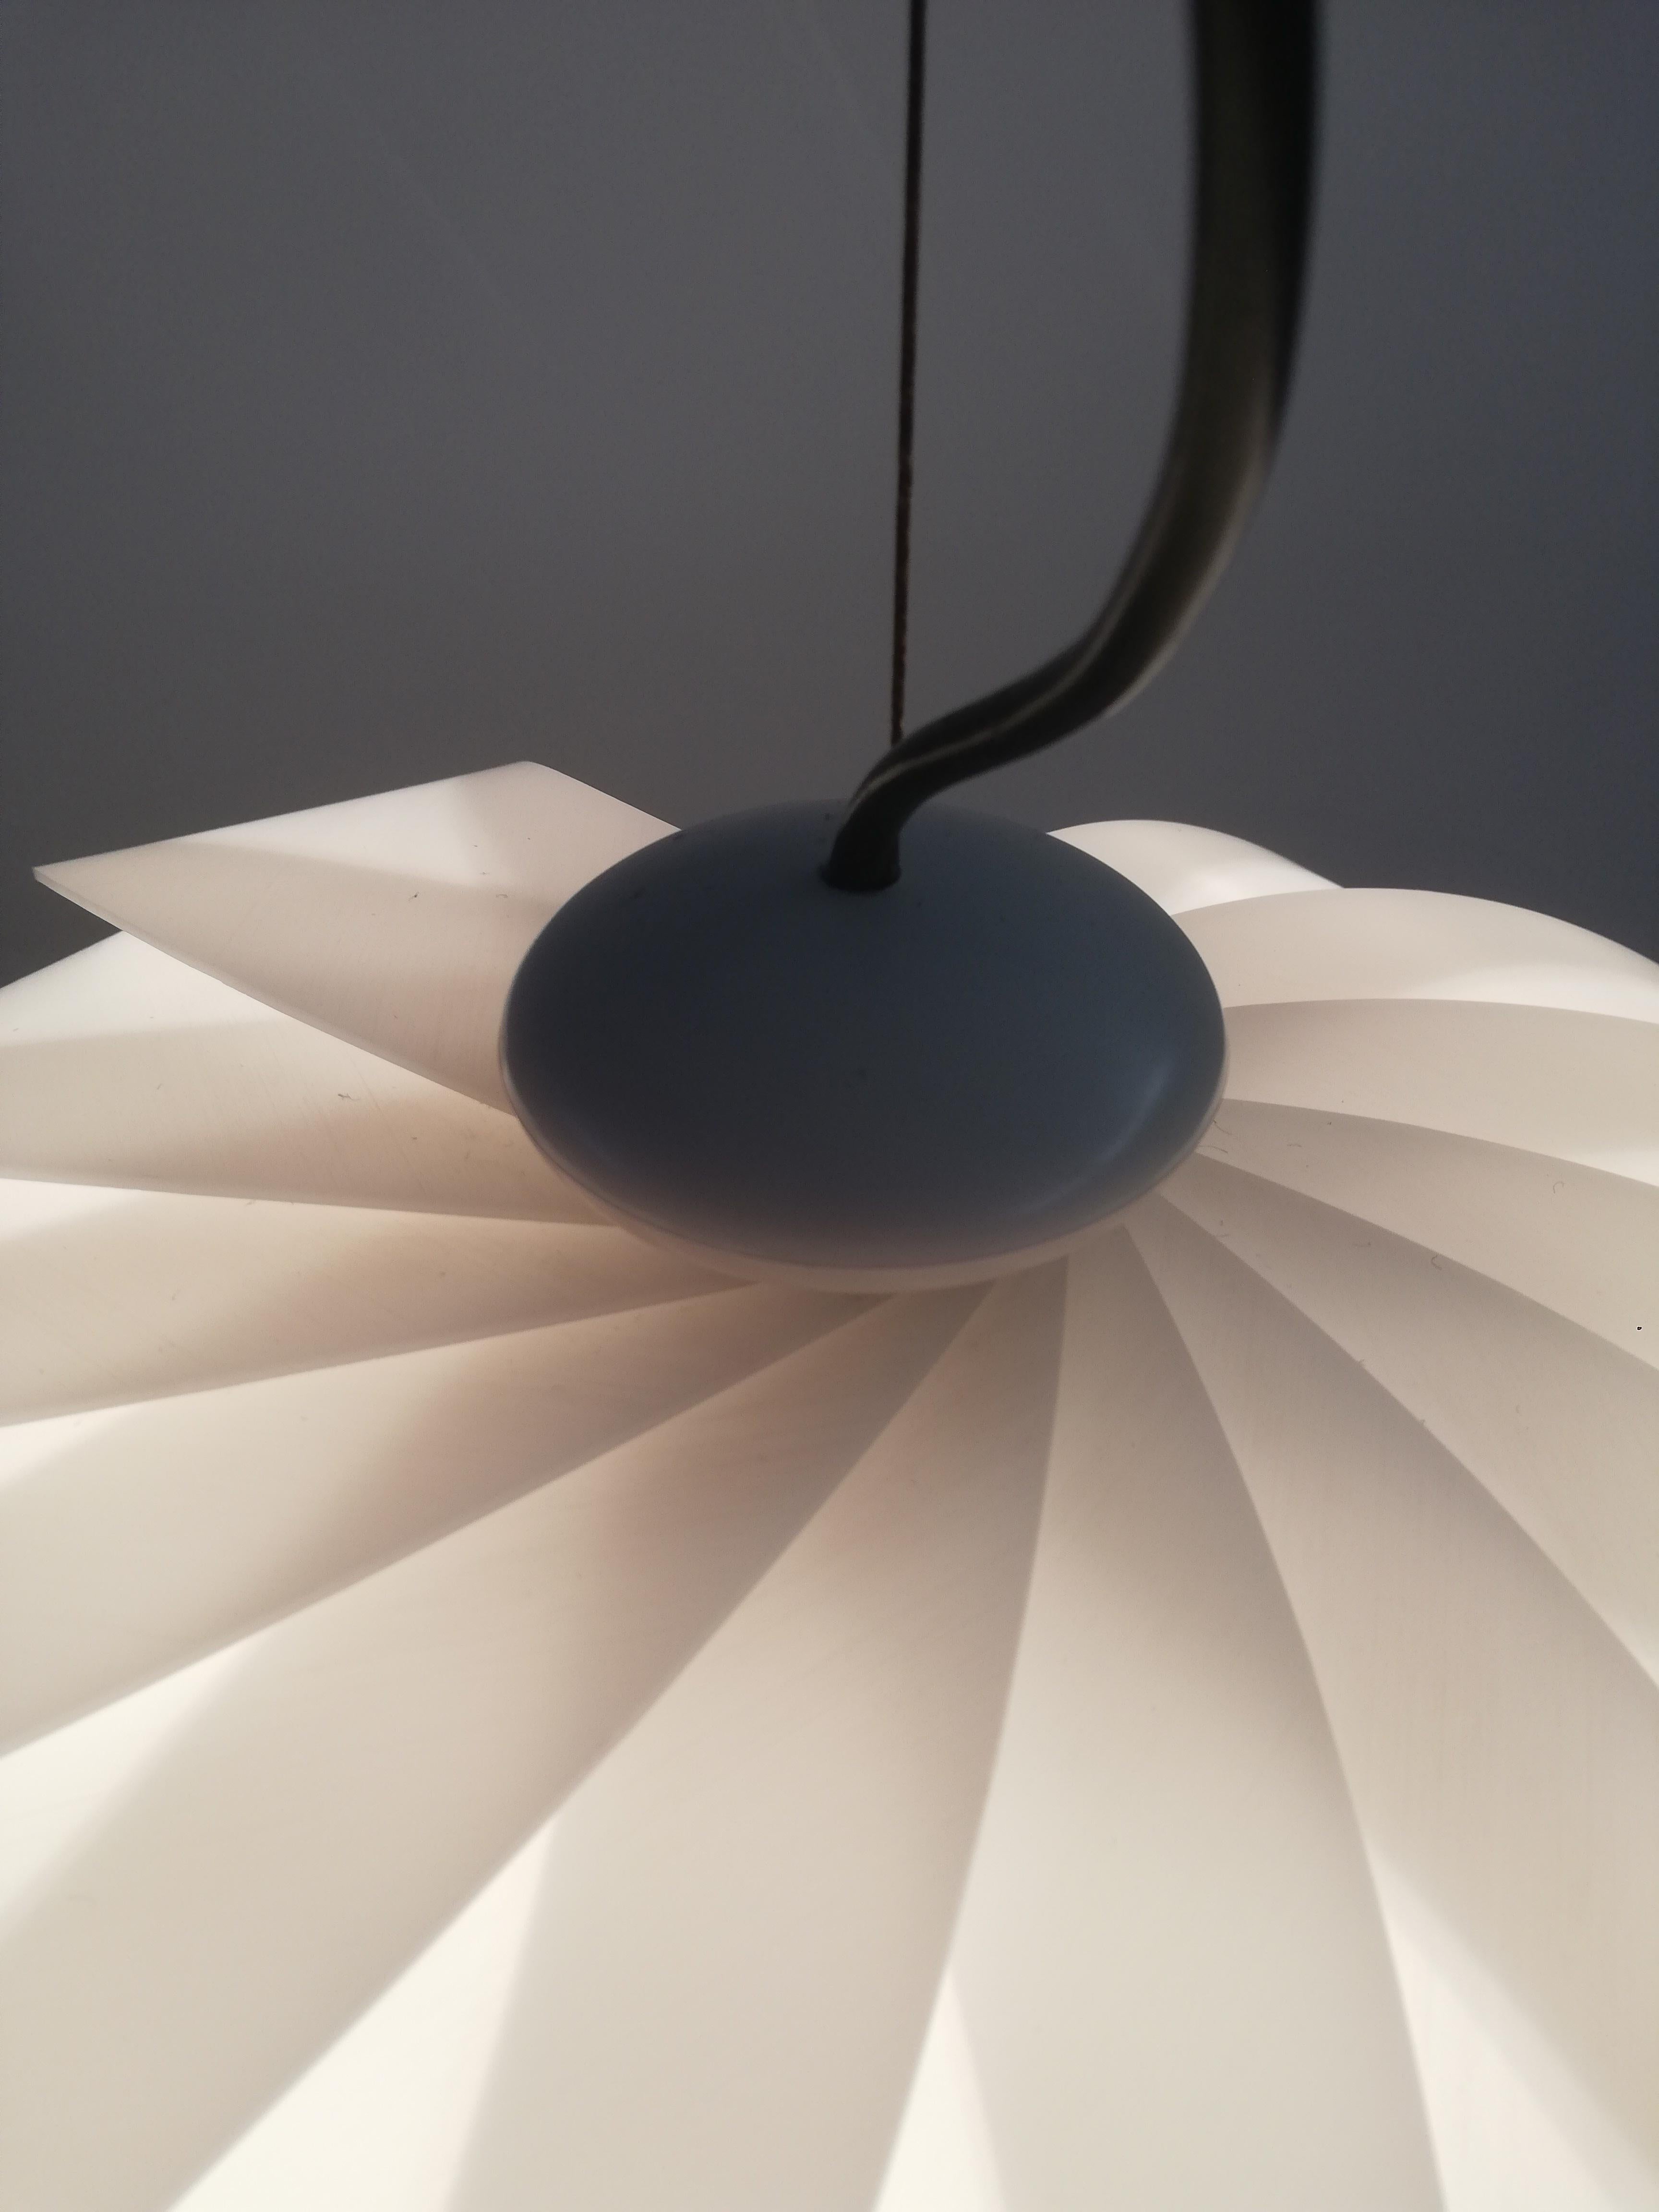 Space Age Pendant by Guzzini in the Style of Eclipse Lamp of Mauricio Klabin 8